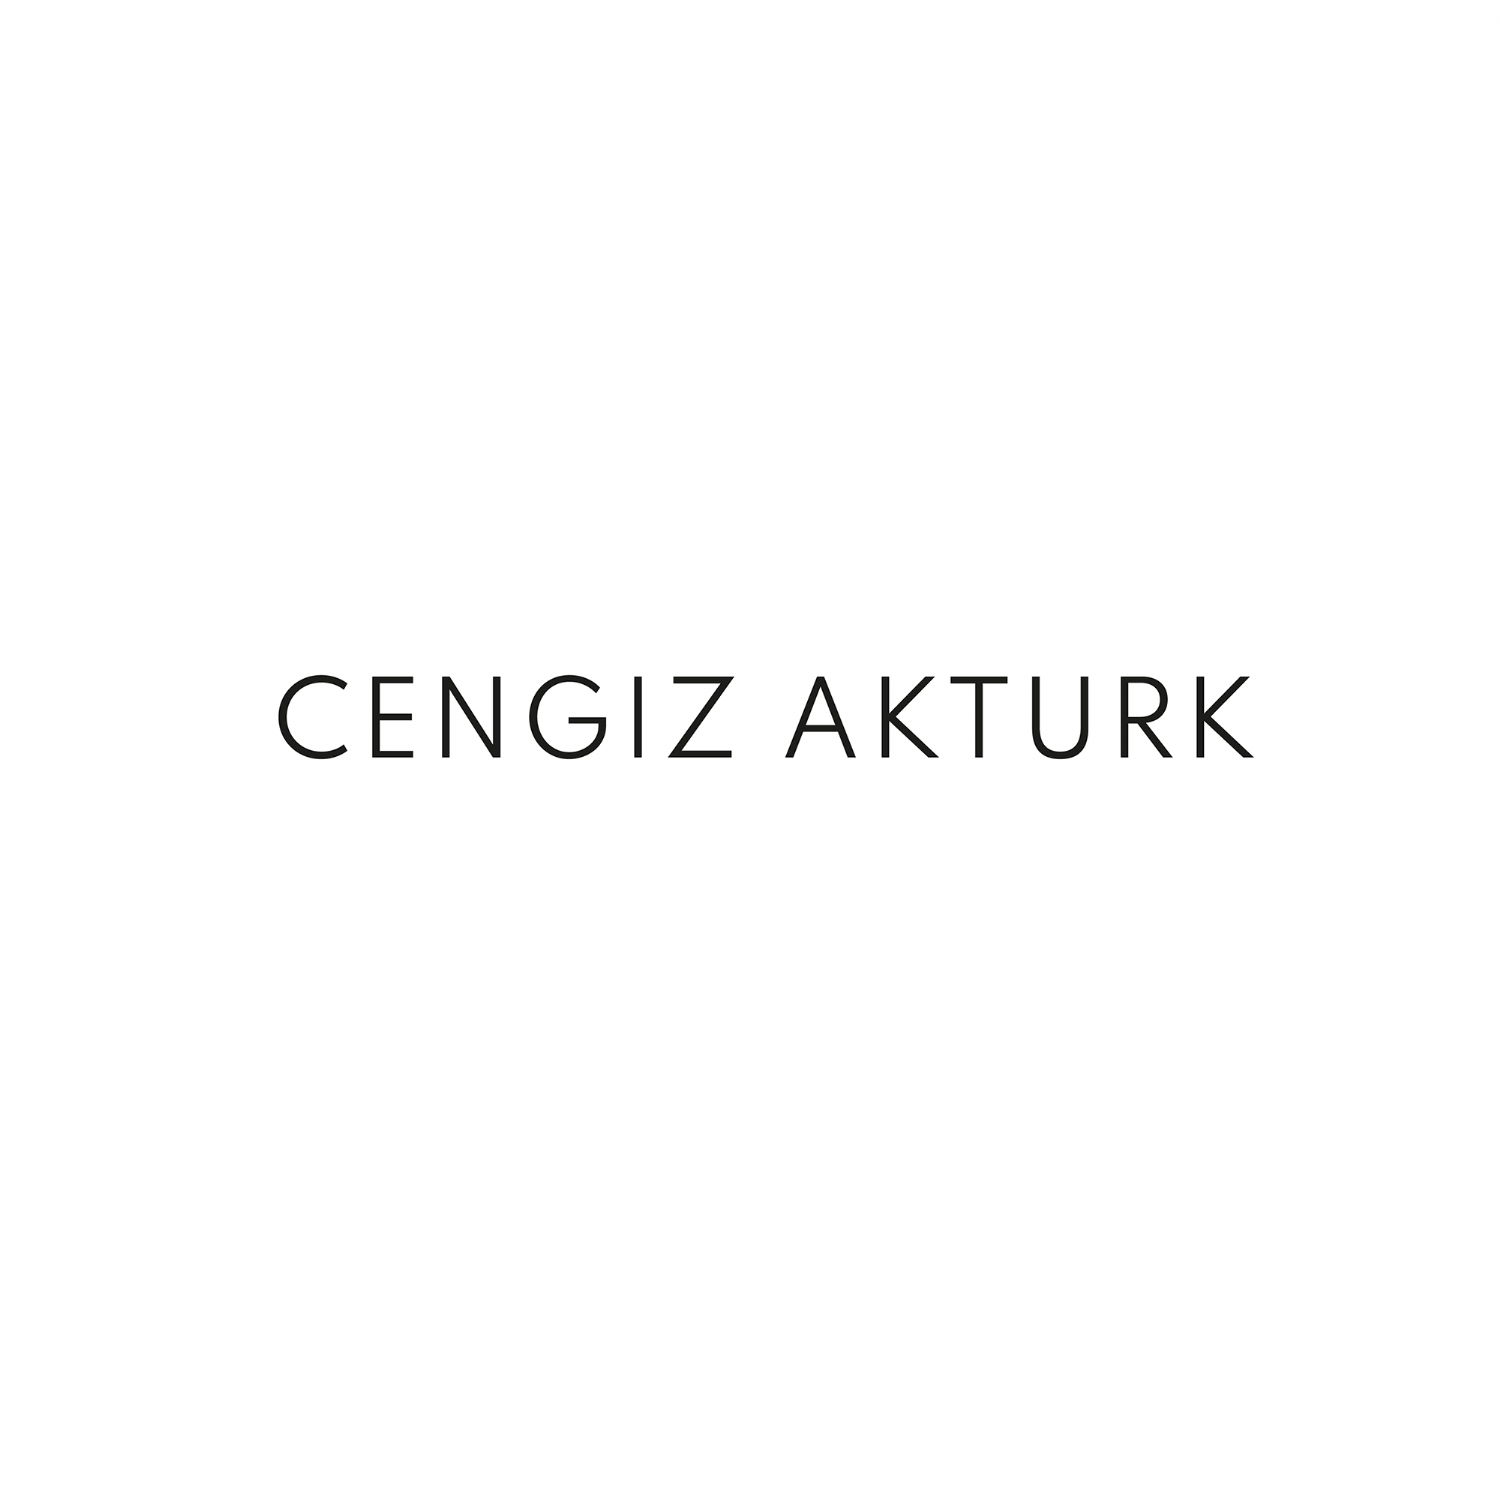 CENGIZ AKTURK Logo